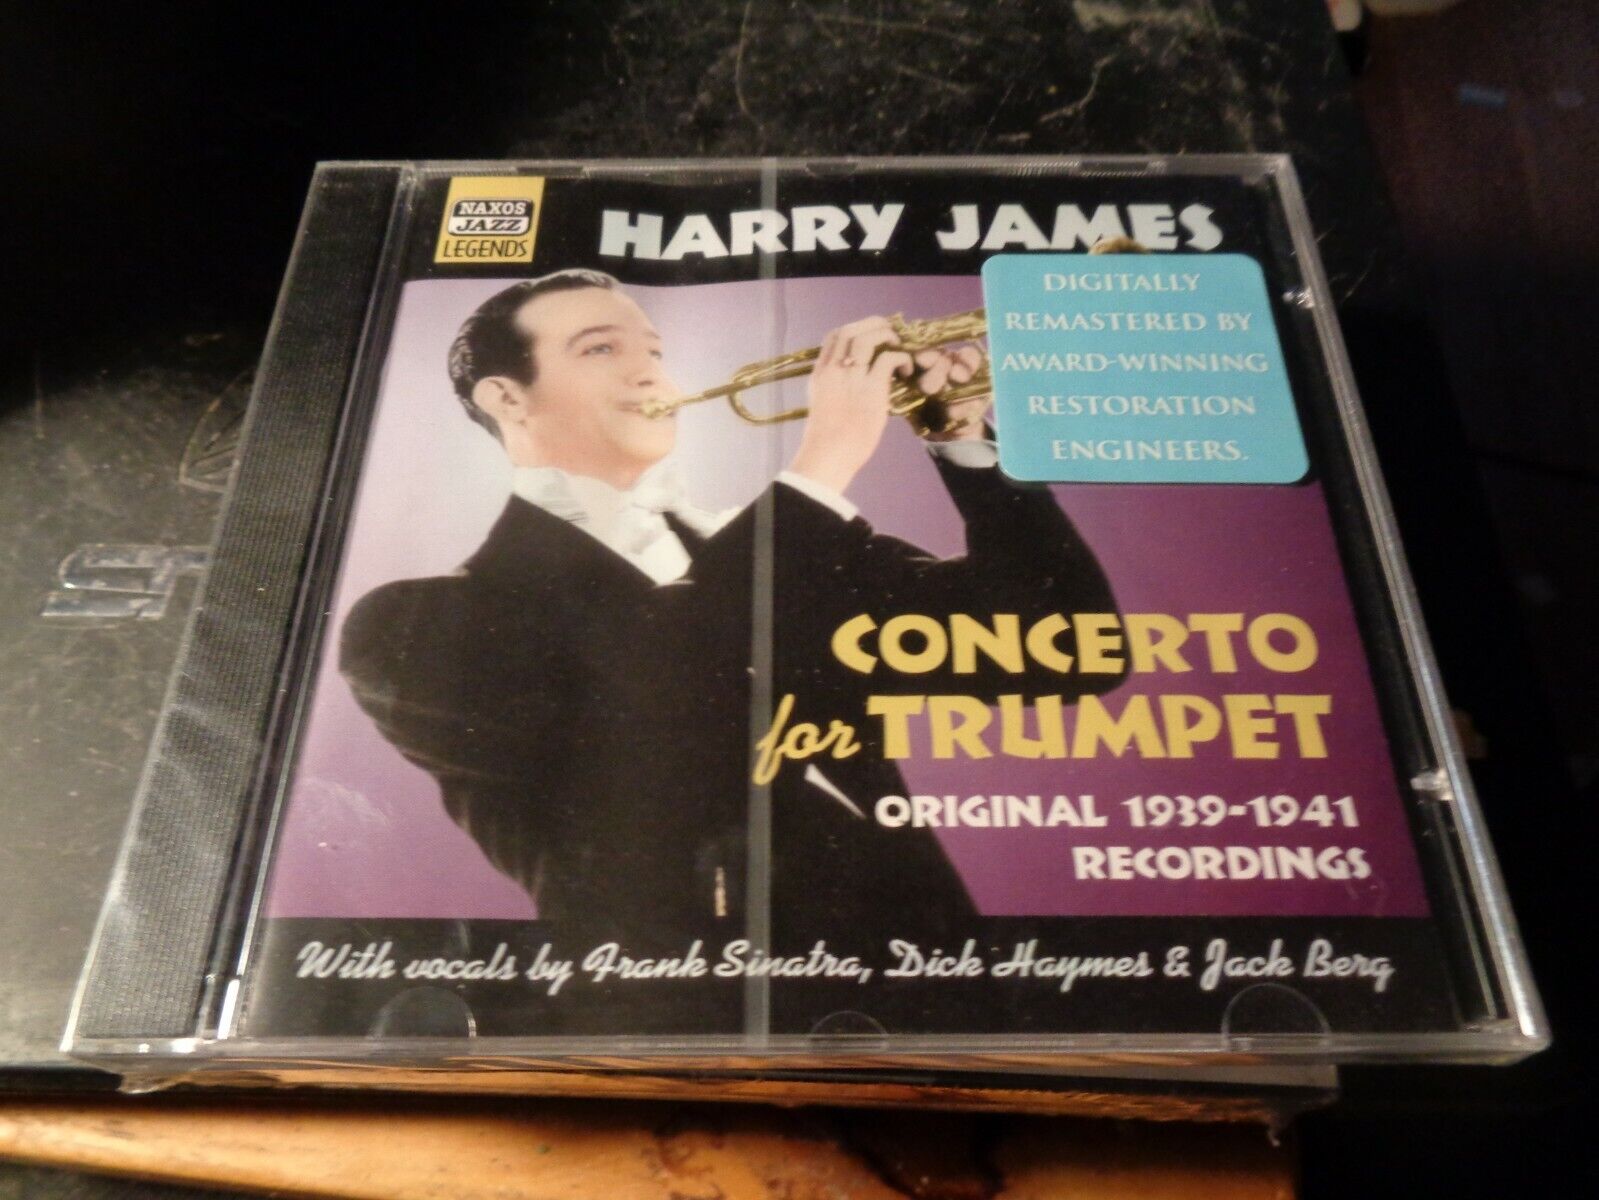 Harry James-Concerto for Trumpet Remastered Original Recordings 1939-1941.